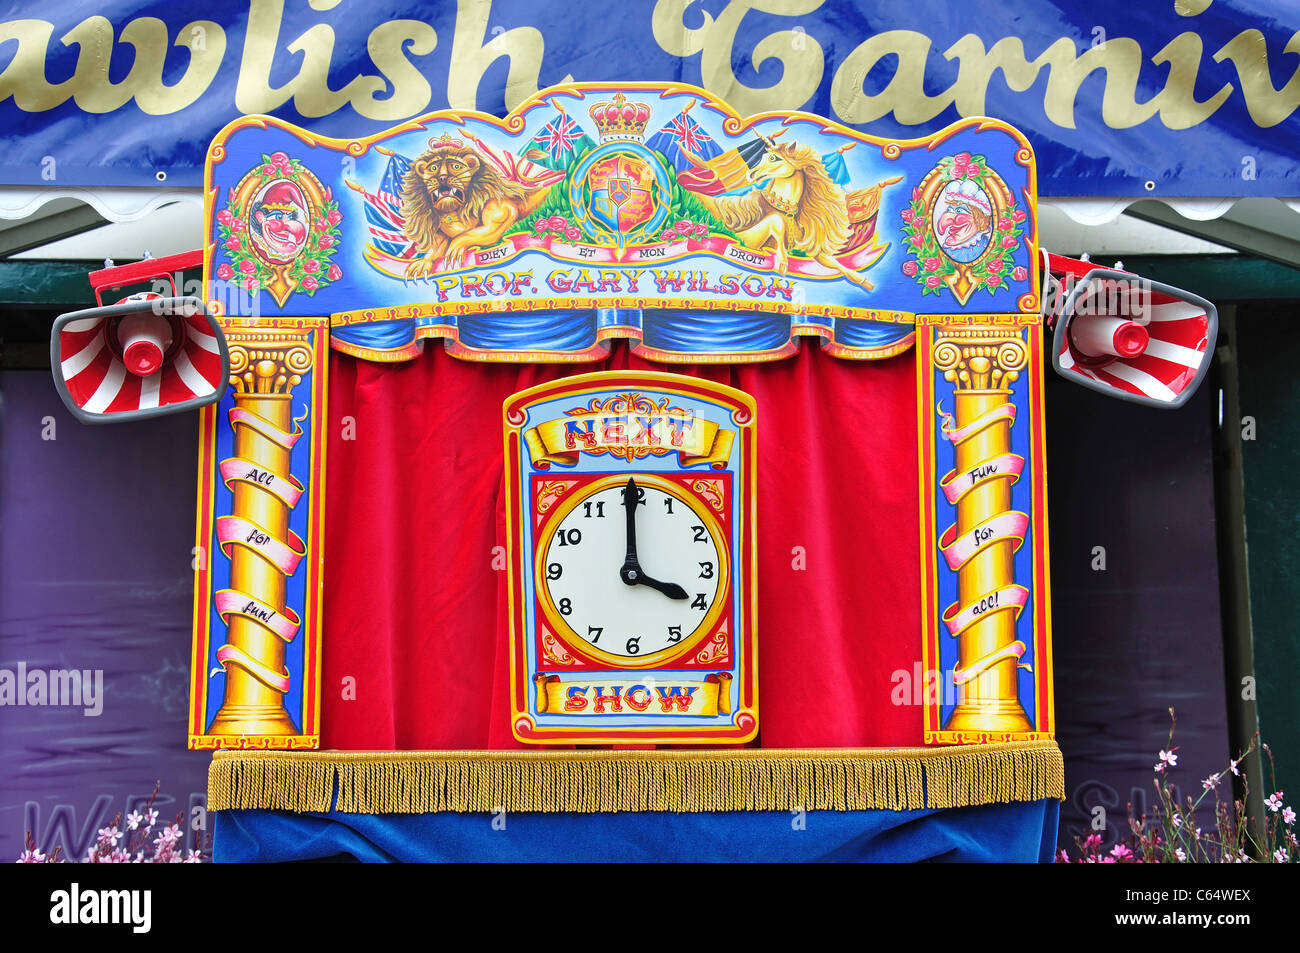 Punch and Judy show, Dawlish Carnival, Dawlish, Teignbridge District, Devon, England, United Kingdom Stock Photo